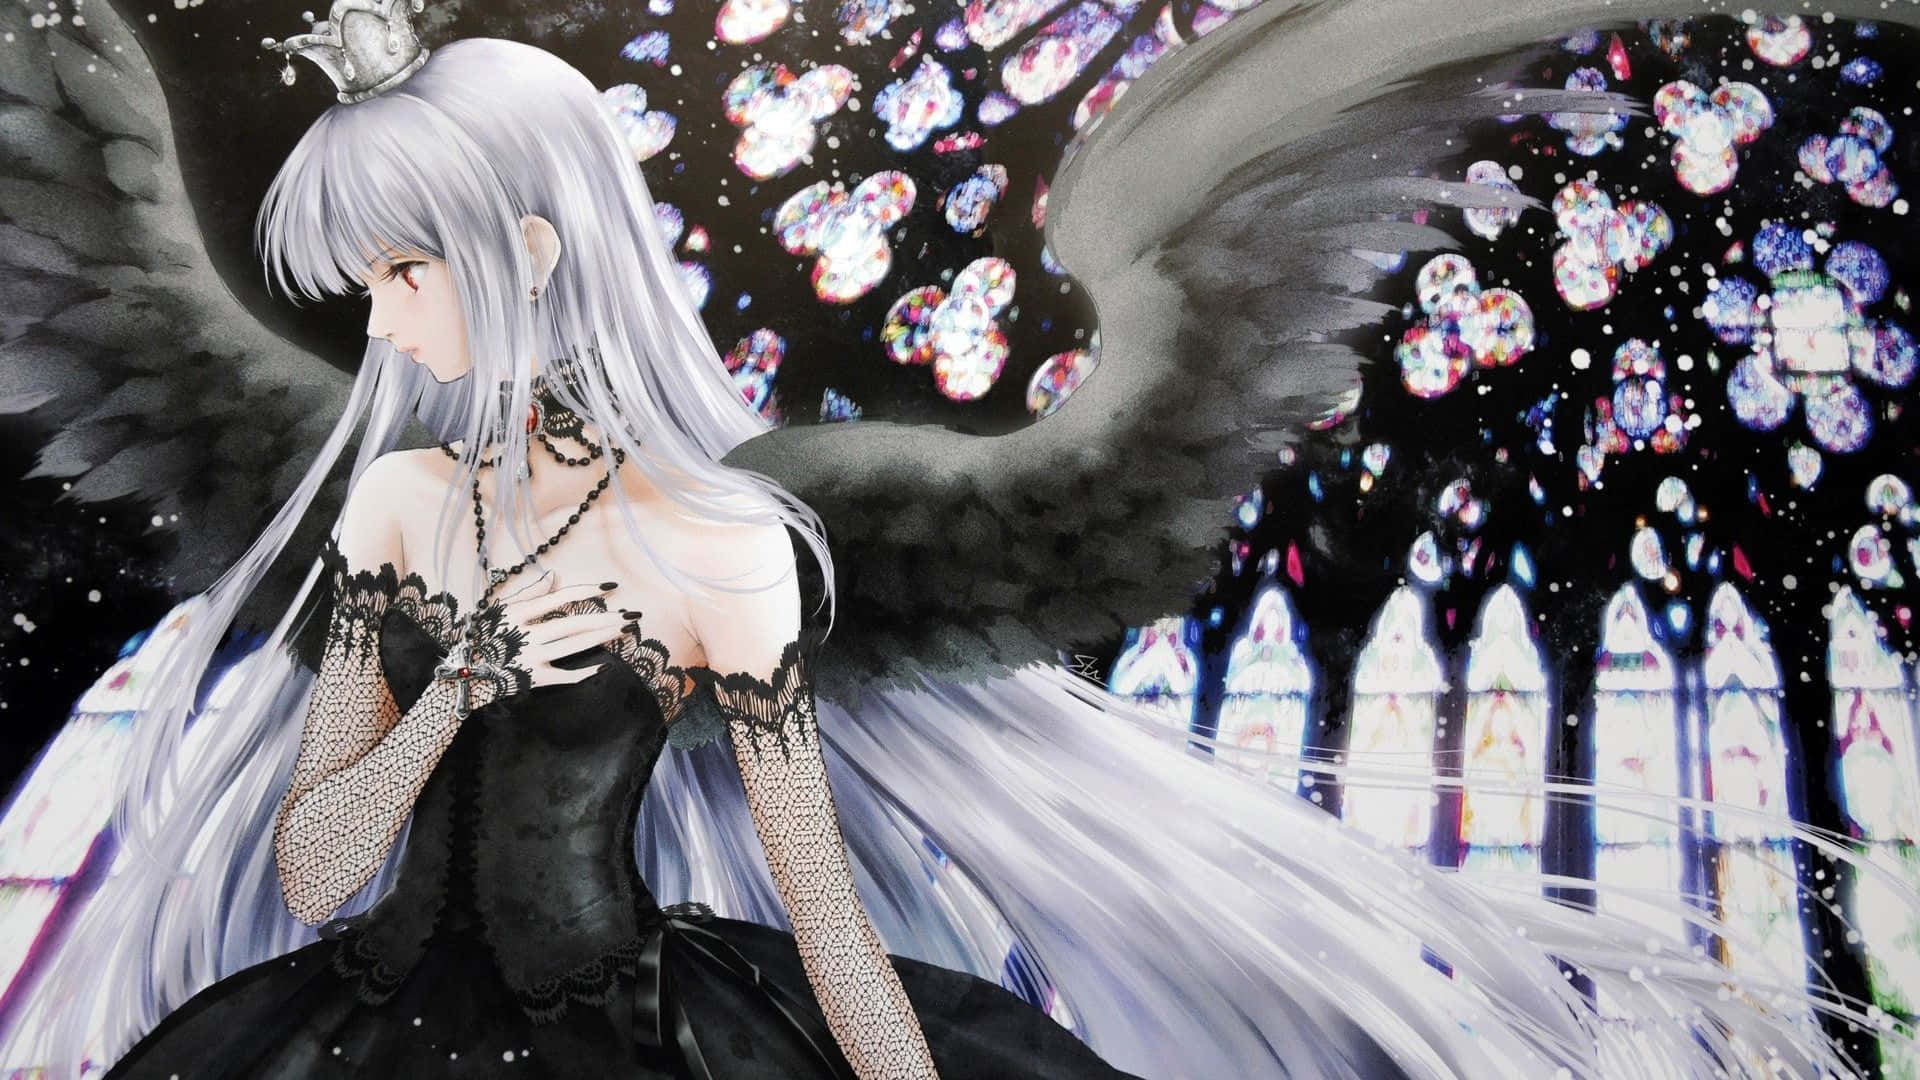 beautiful anime dark angel